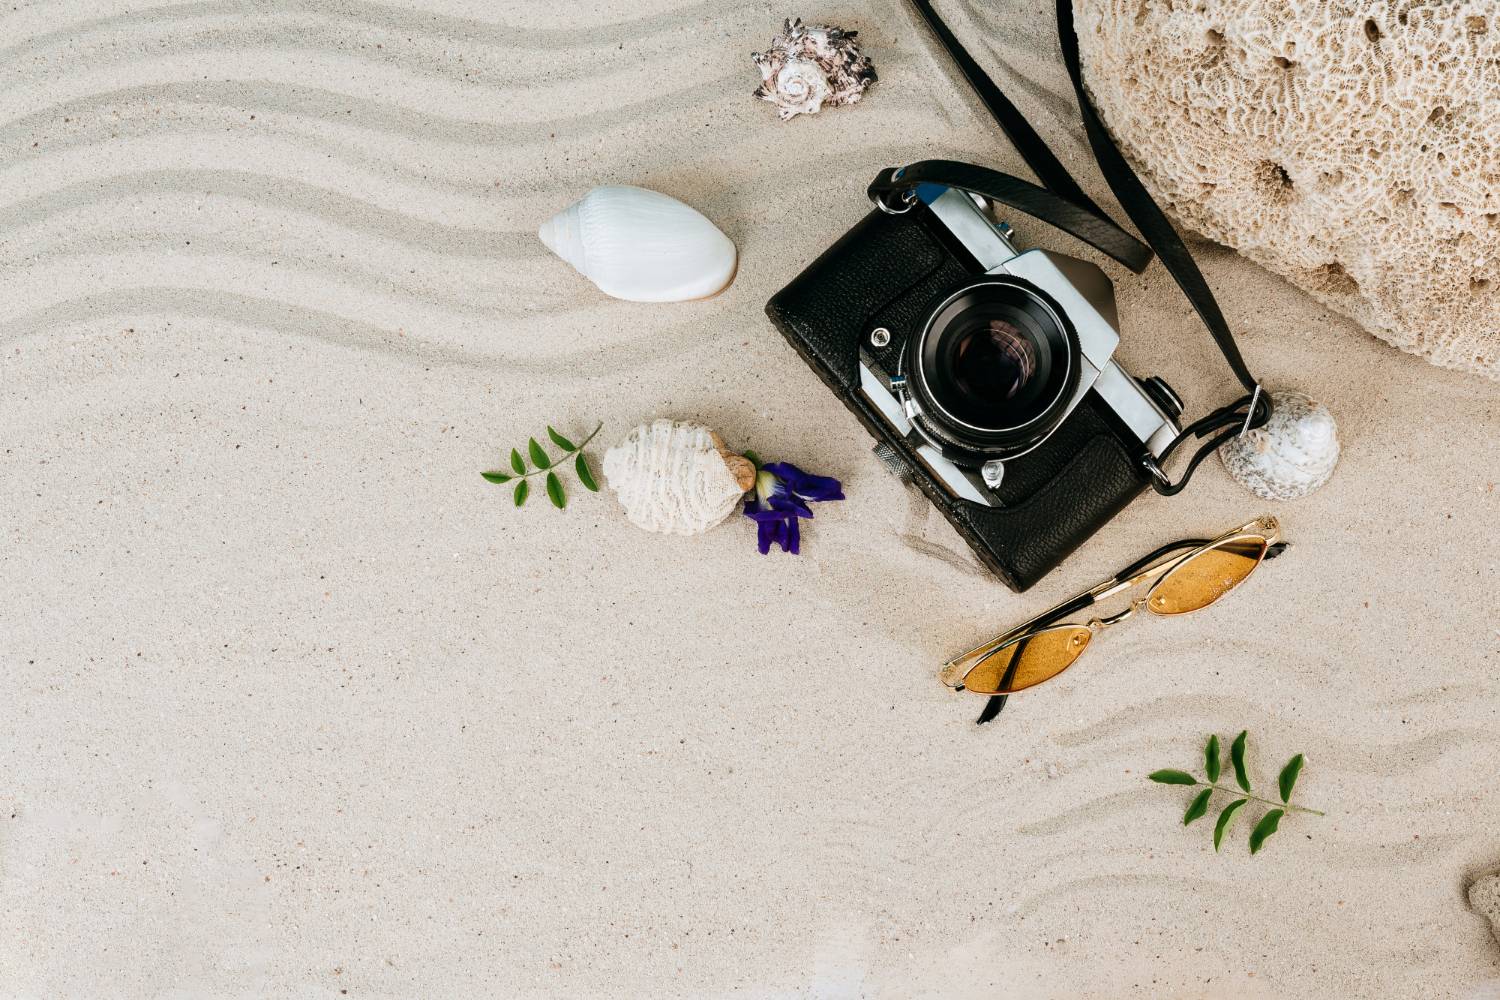 Beach photography setup with a camera and seashells, essentials for capturing pontoon picnic memories.